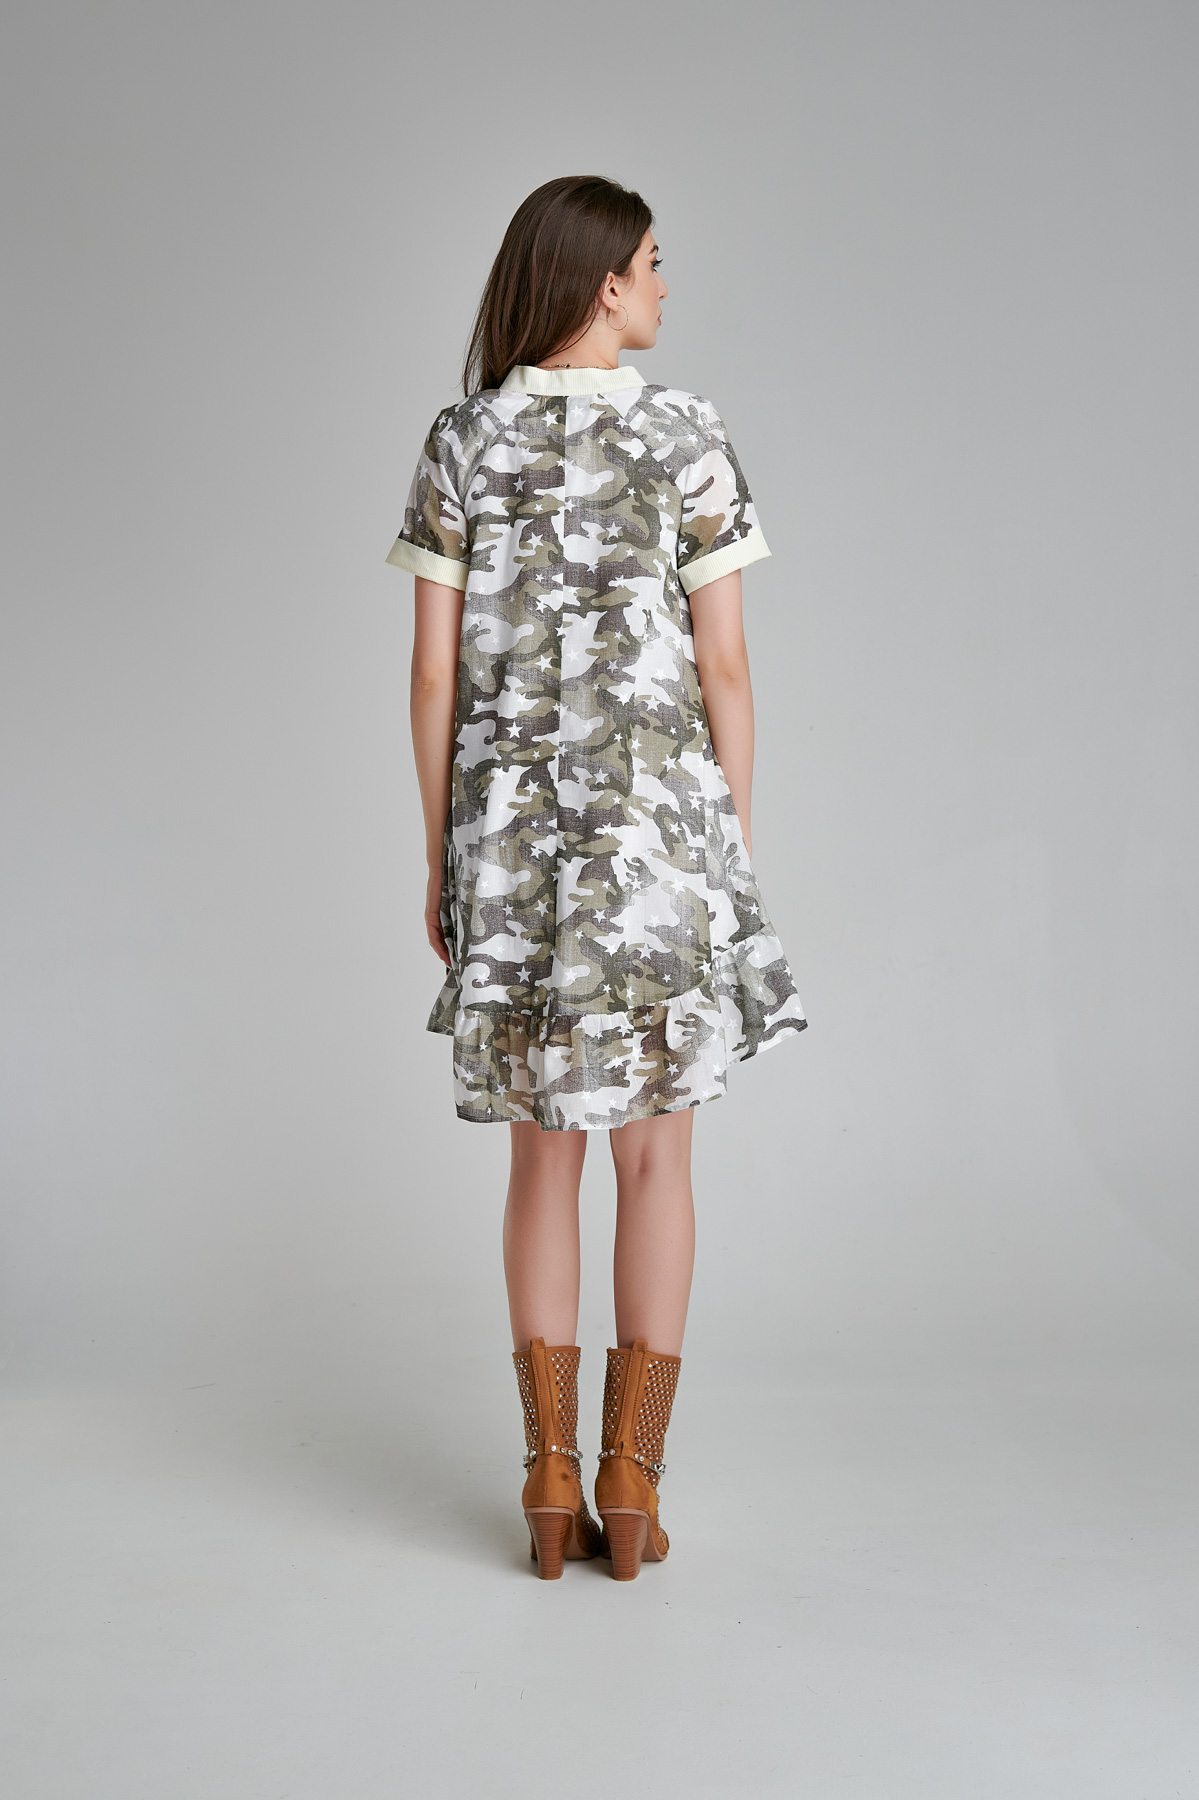 GIULI casual day dress with camouflage print. Natural fabrics, original design, handmade embroidery